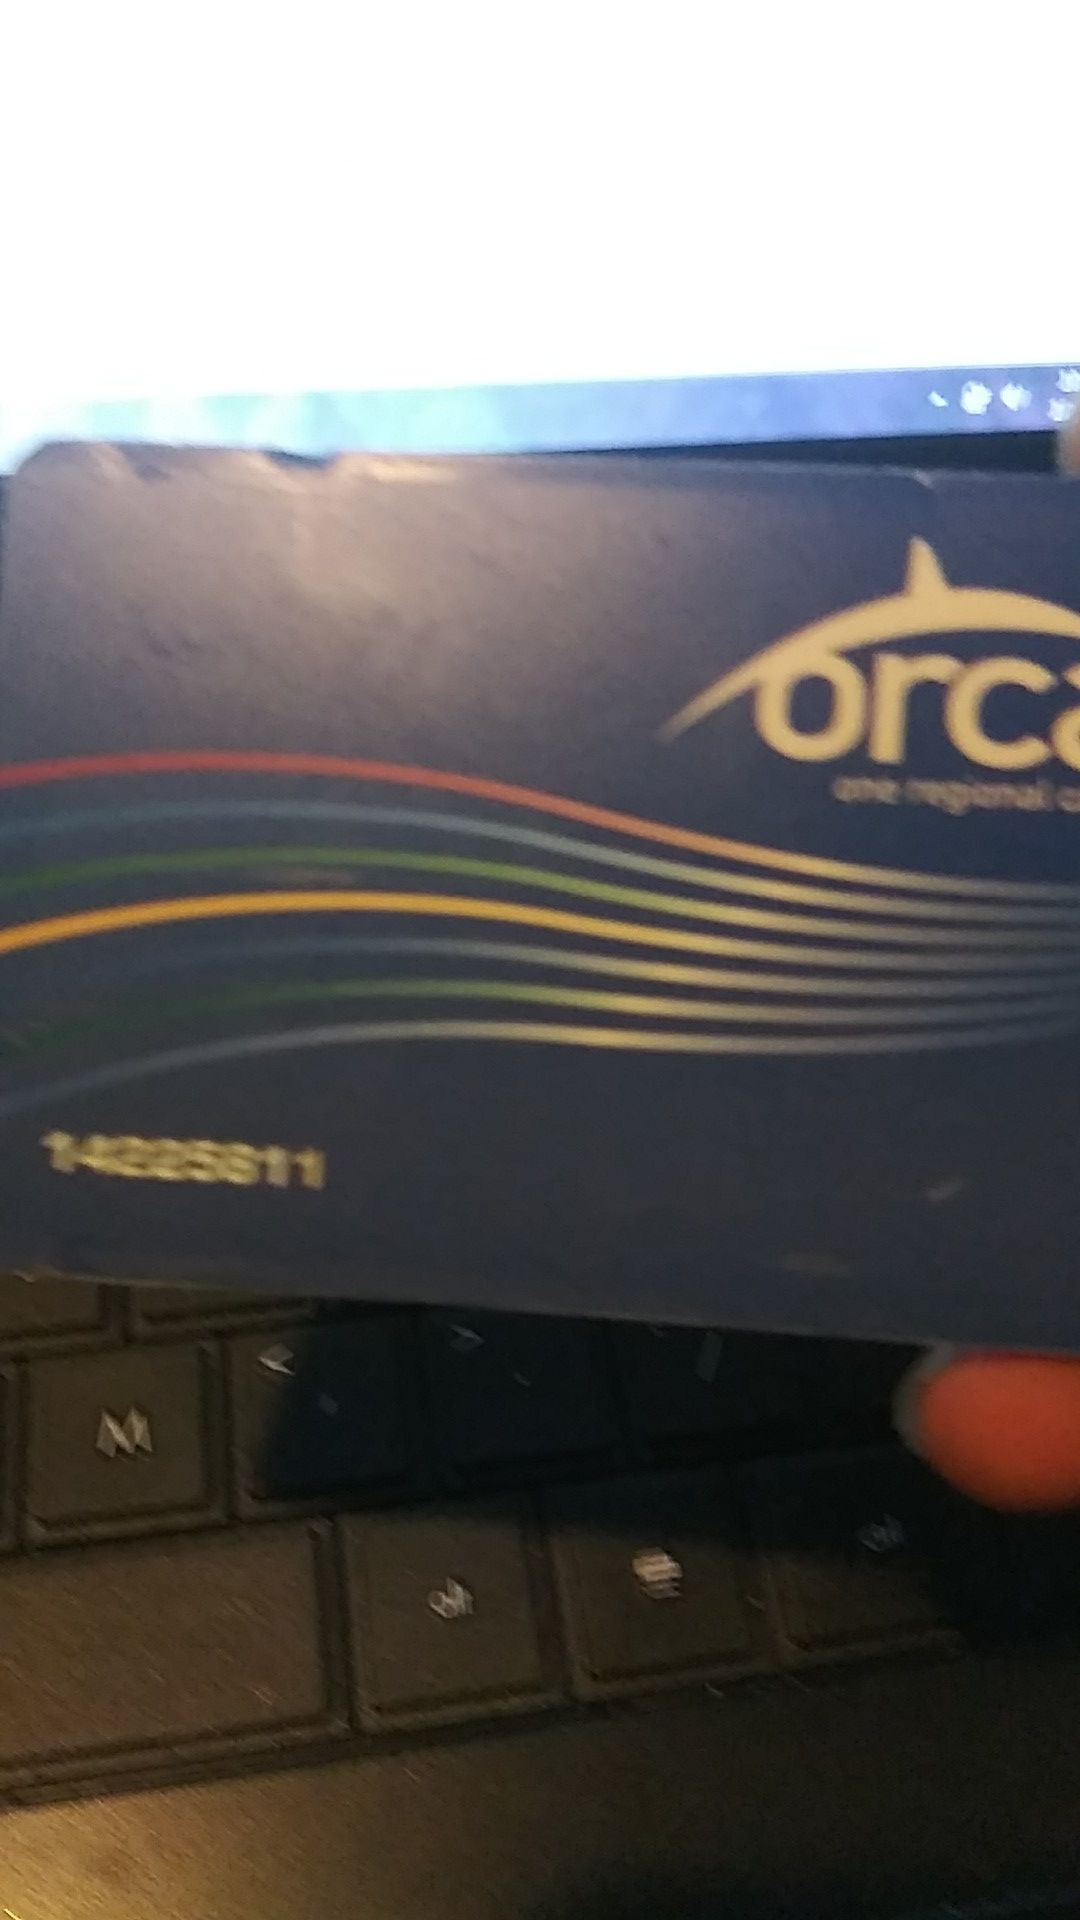 ORCA CARD 77$ ON IT